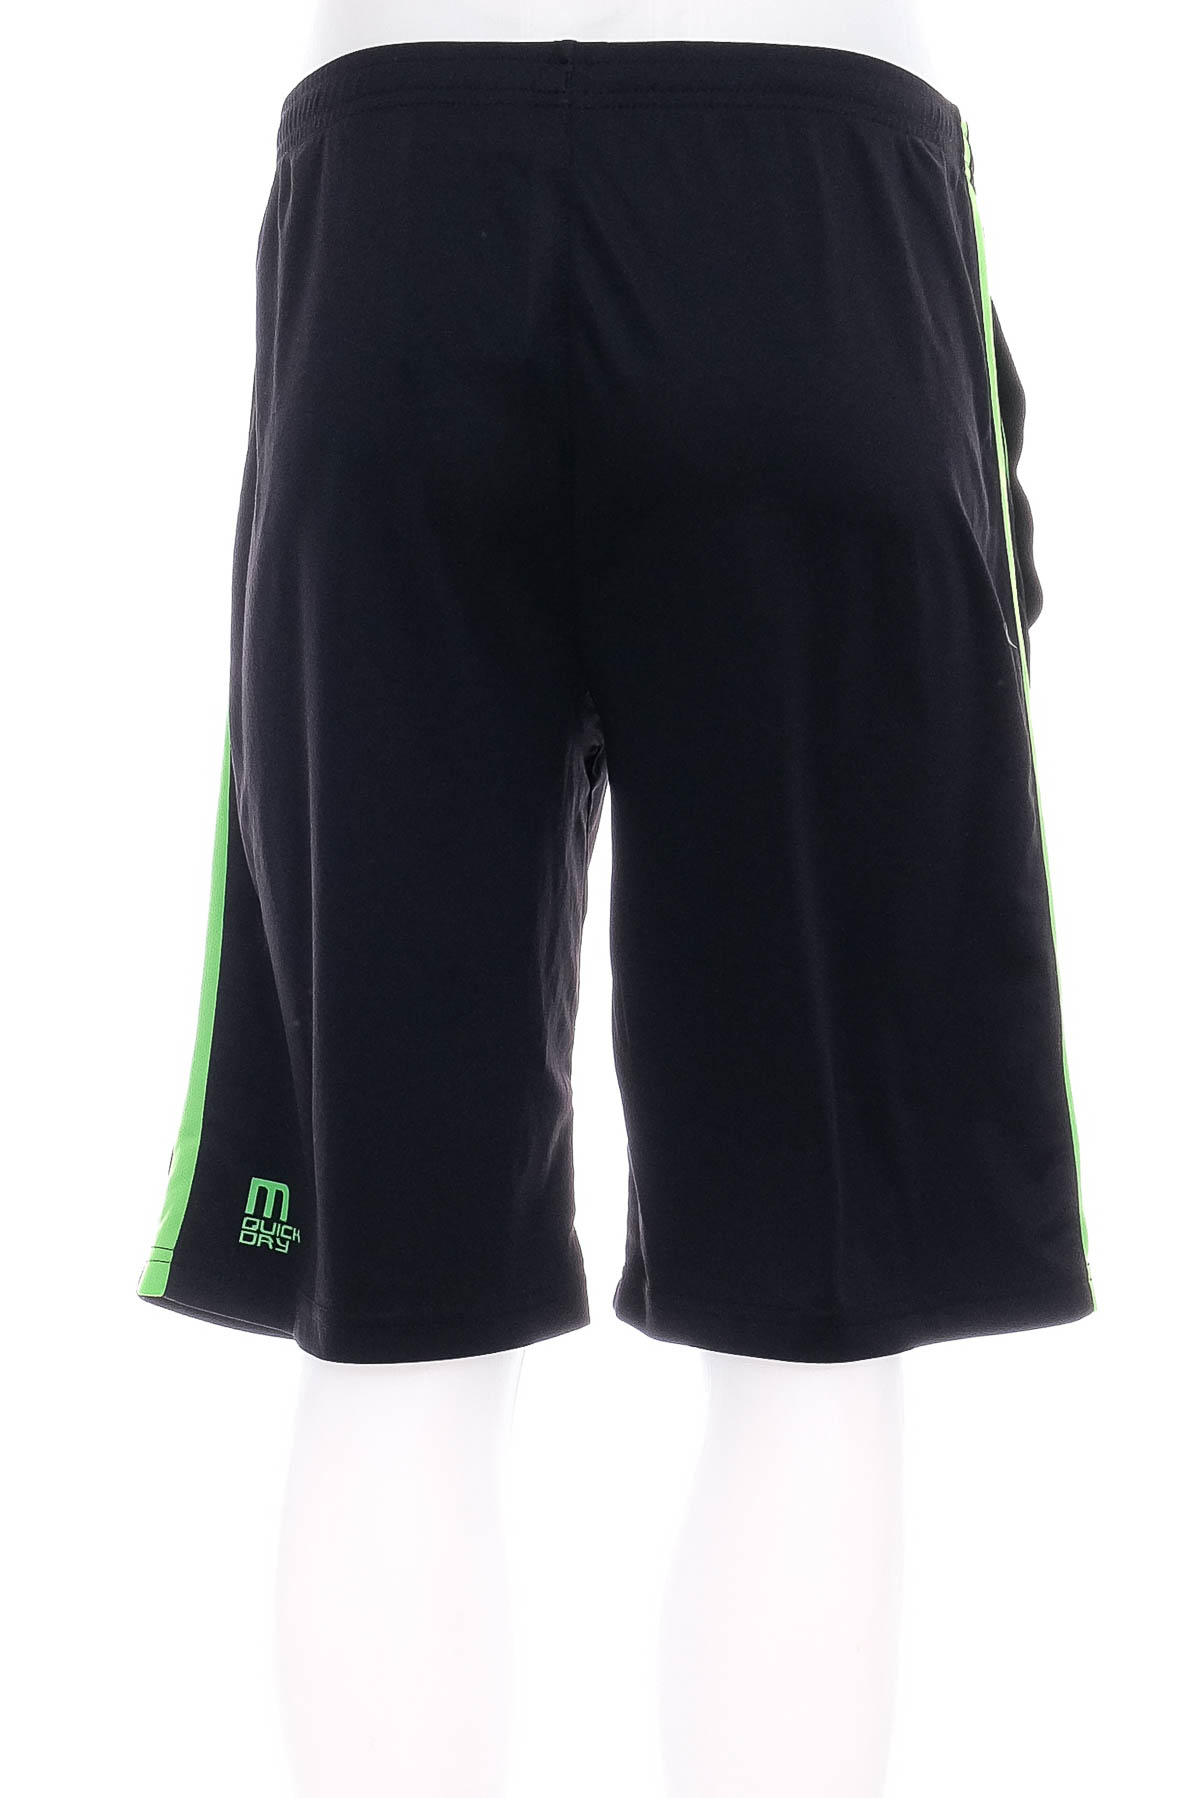 Shorts for boys - Manguun sports - 1